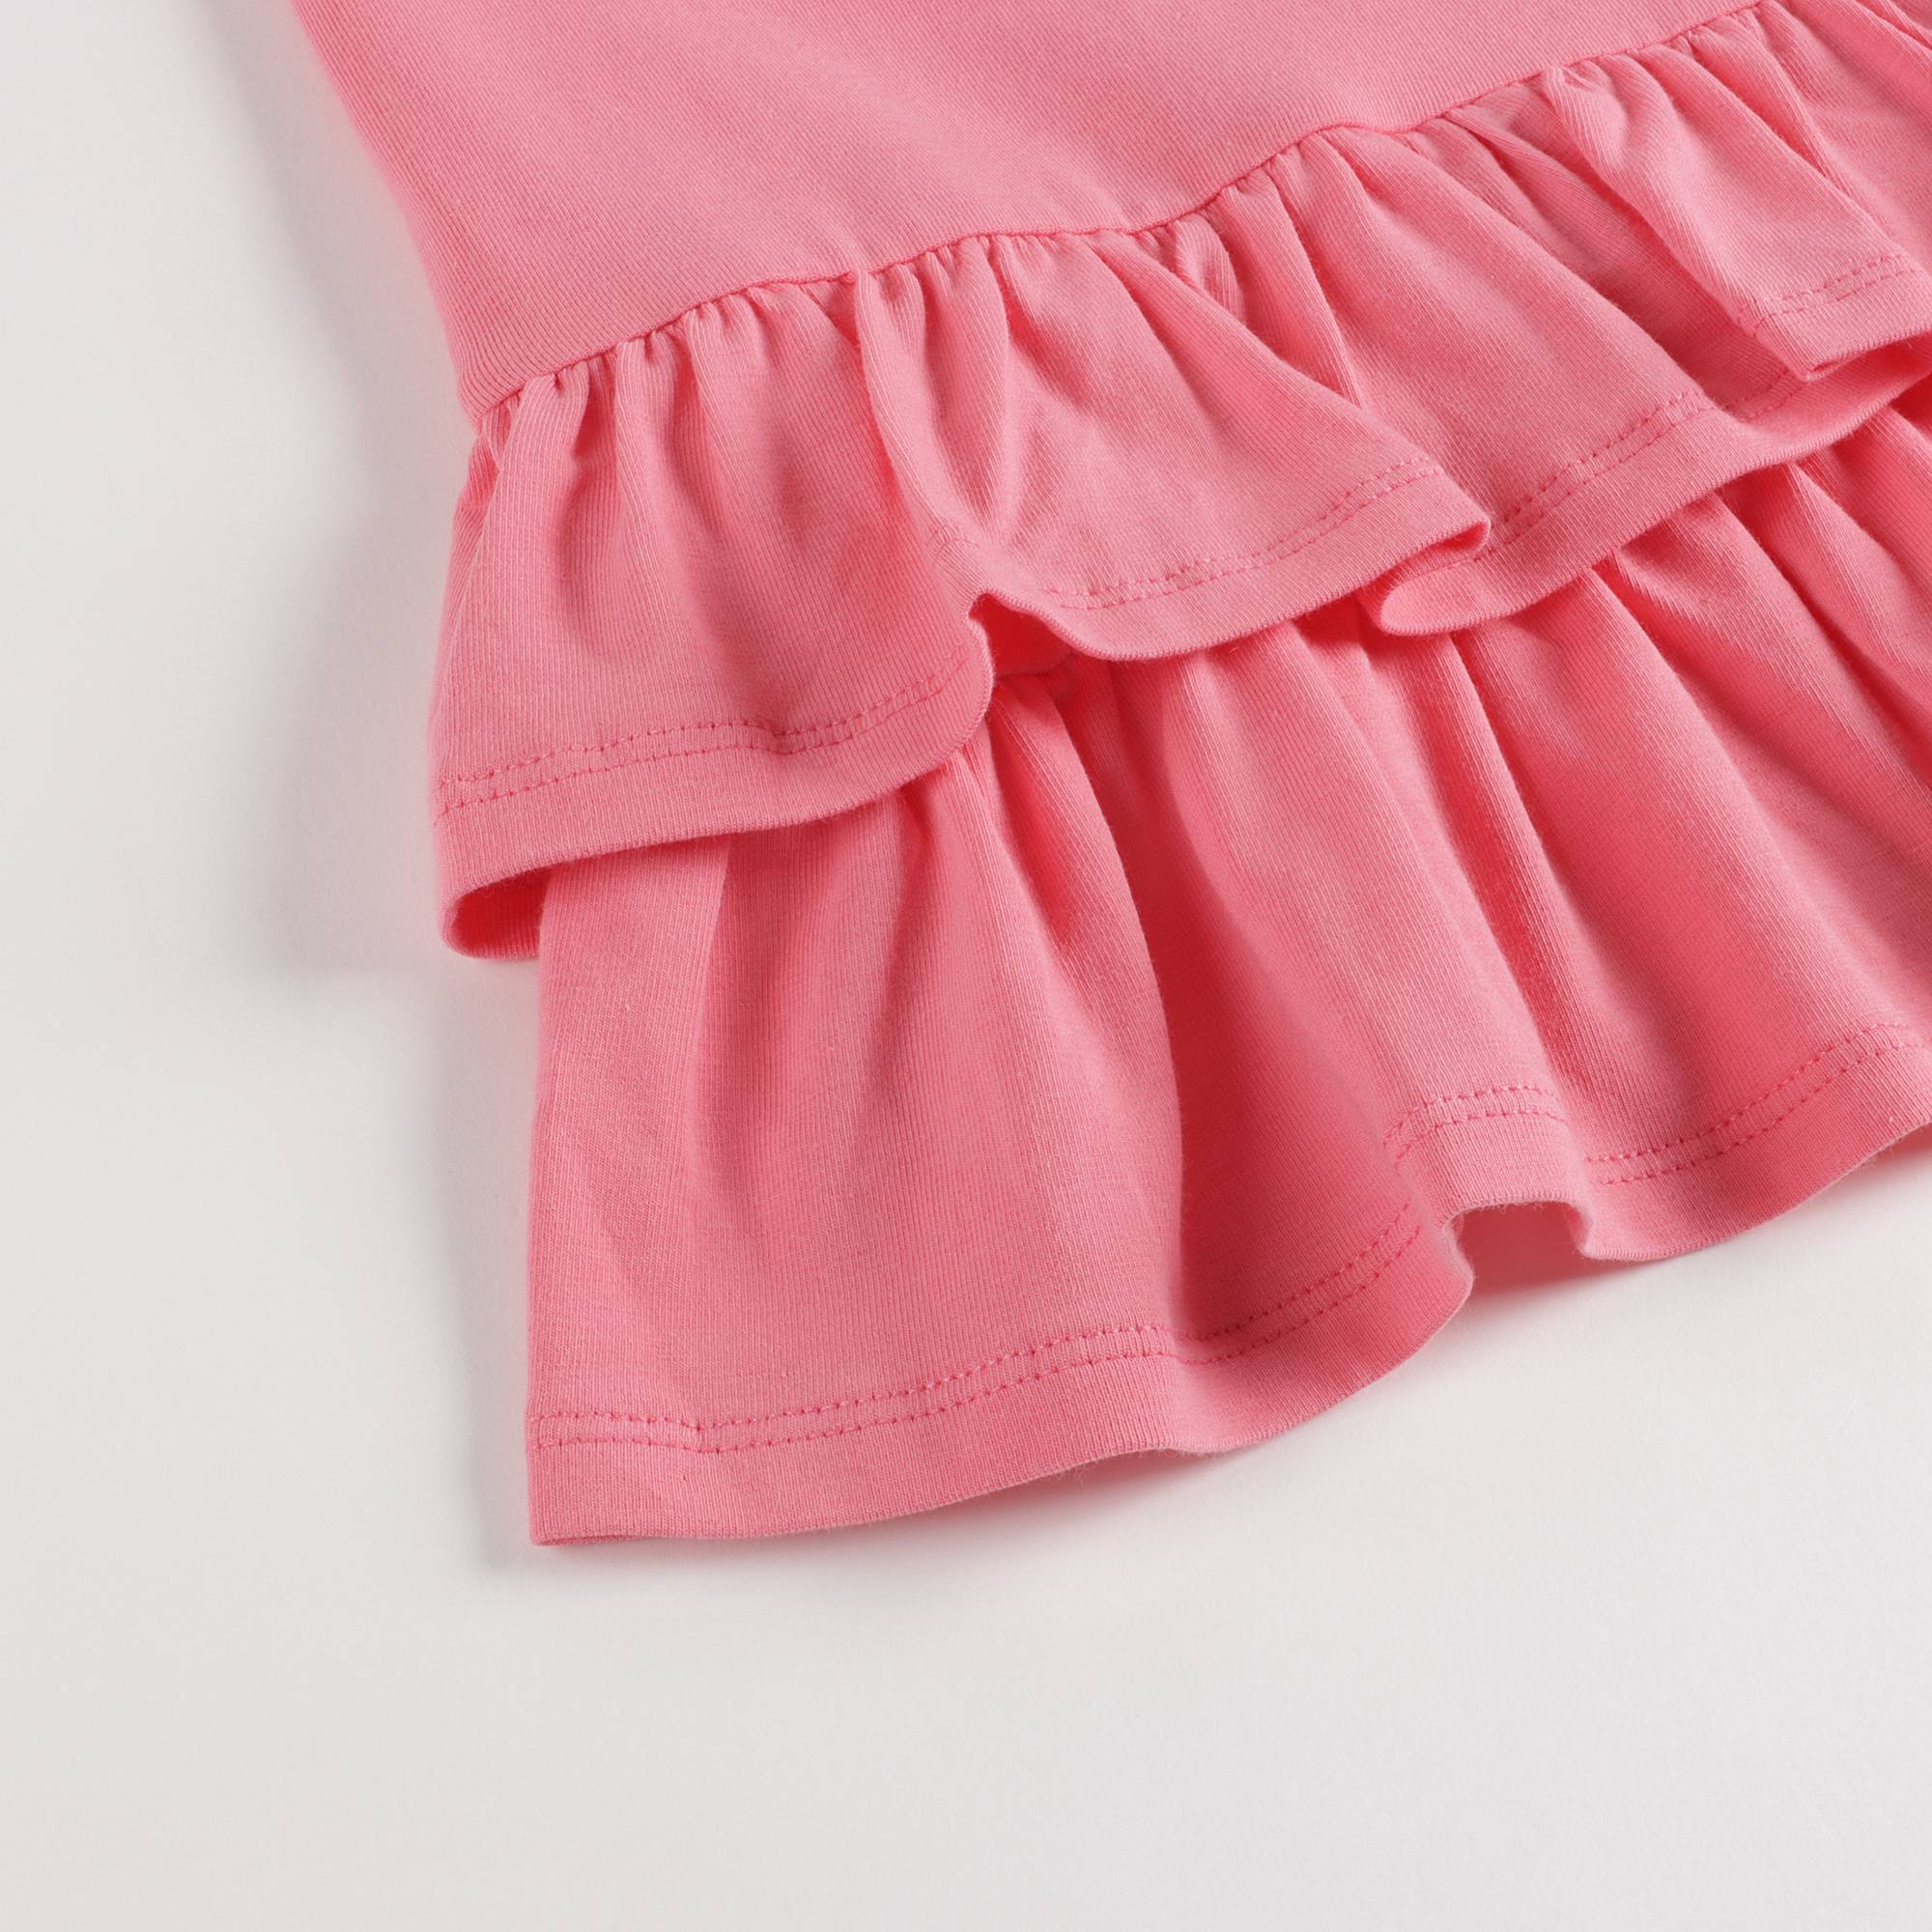 Baby Girls Pink Stripe Cotton Dress